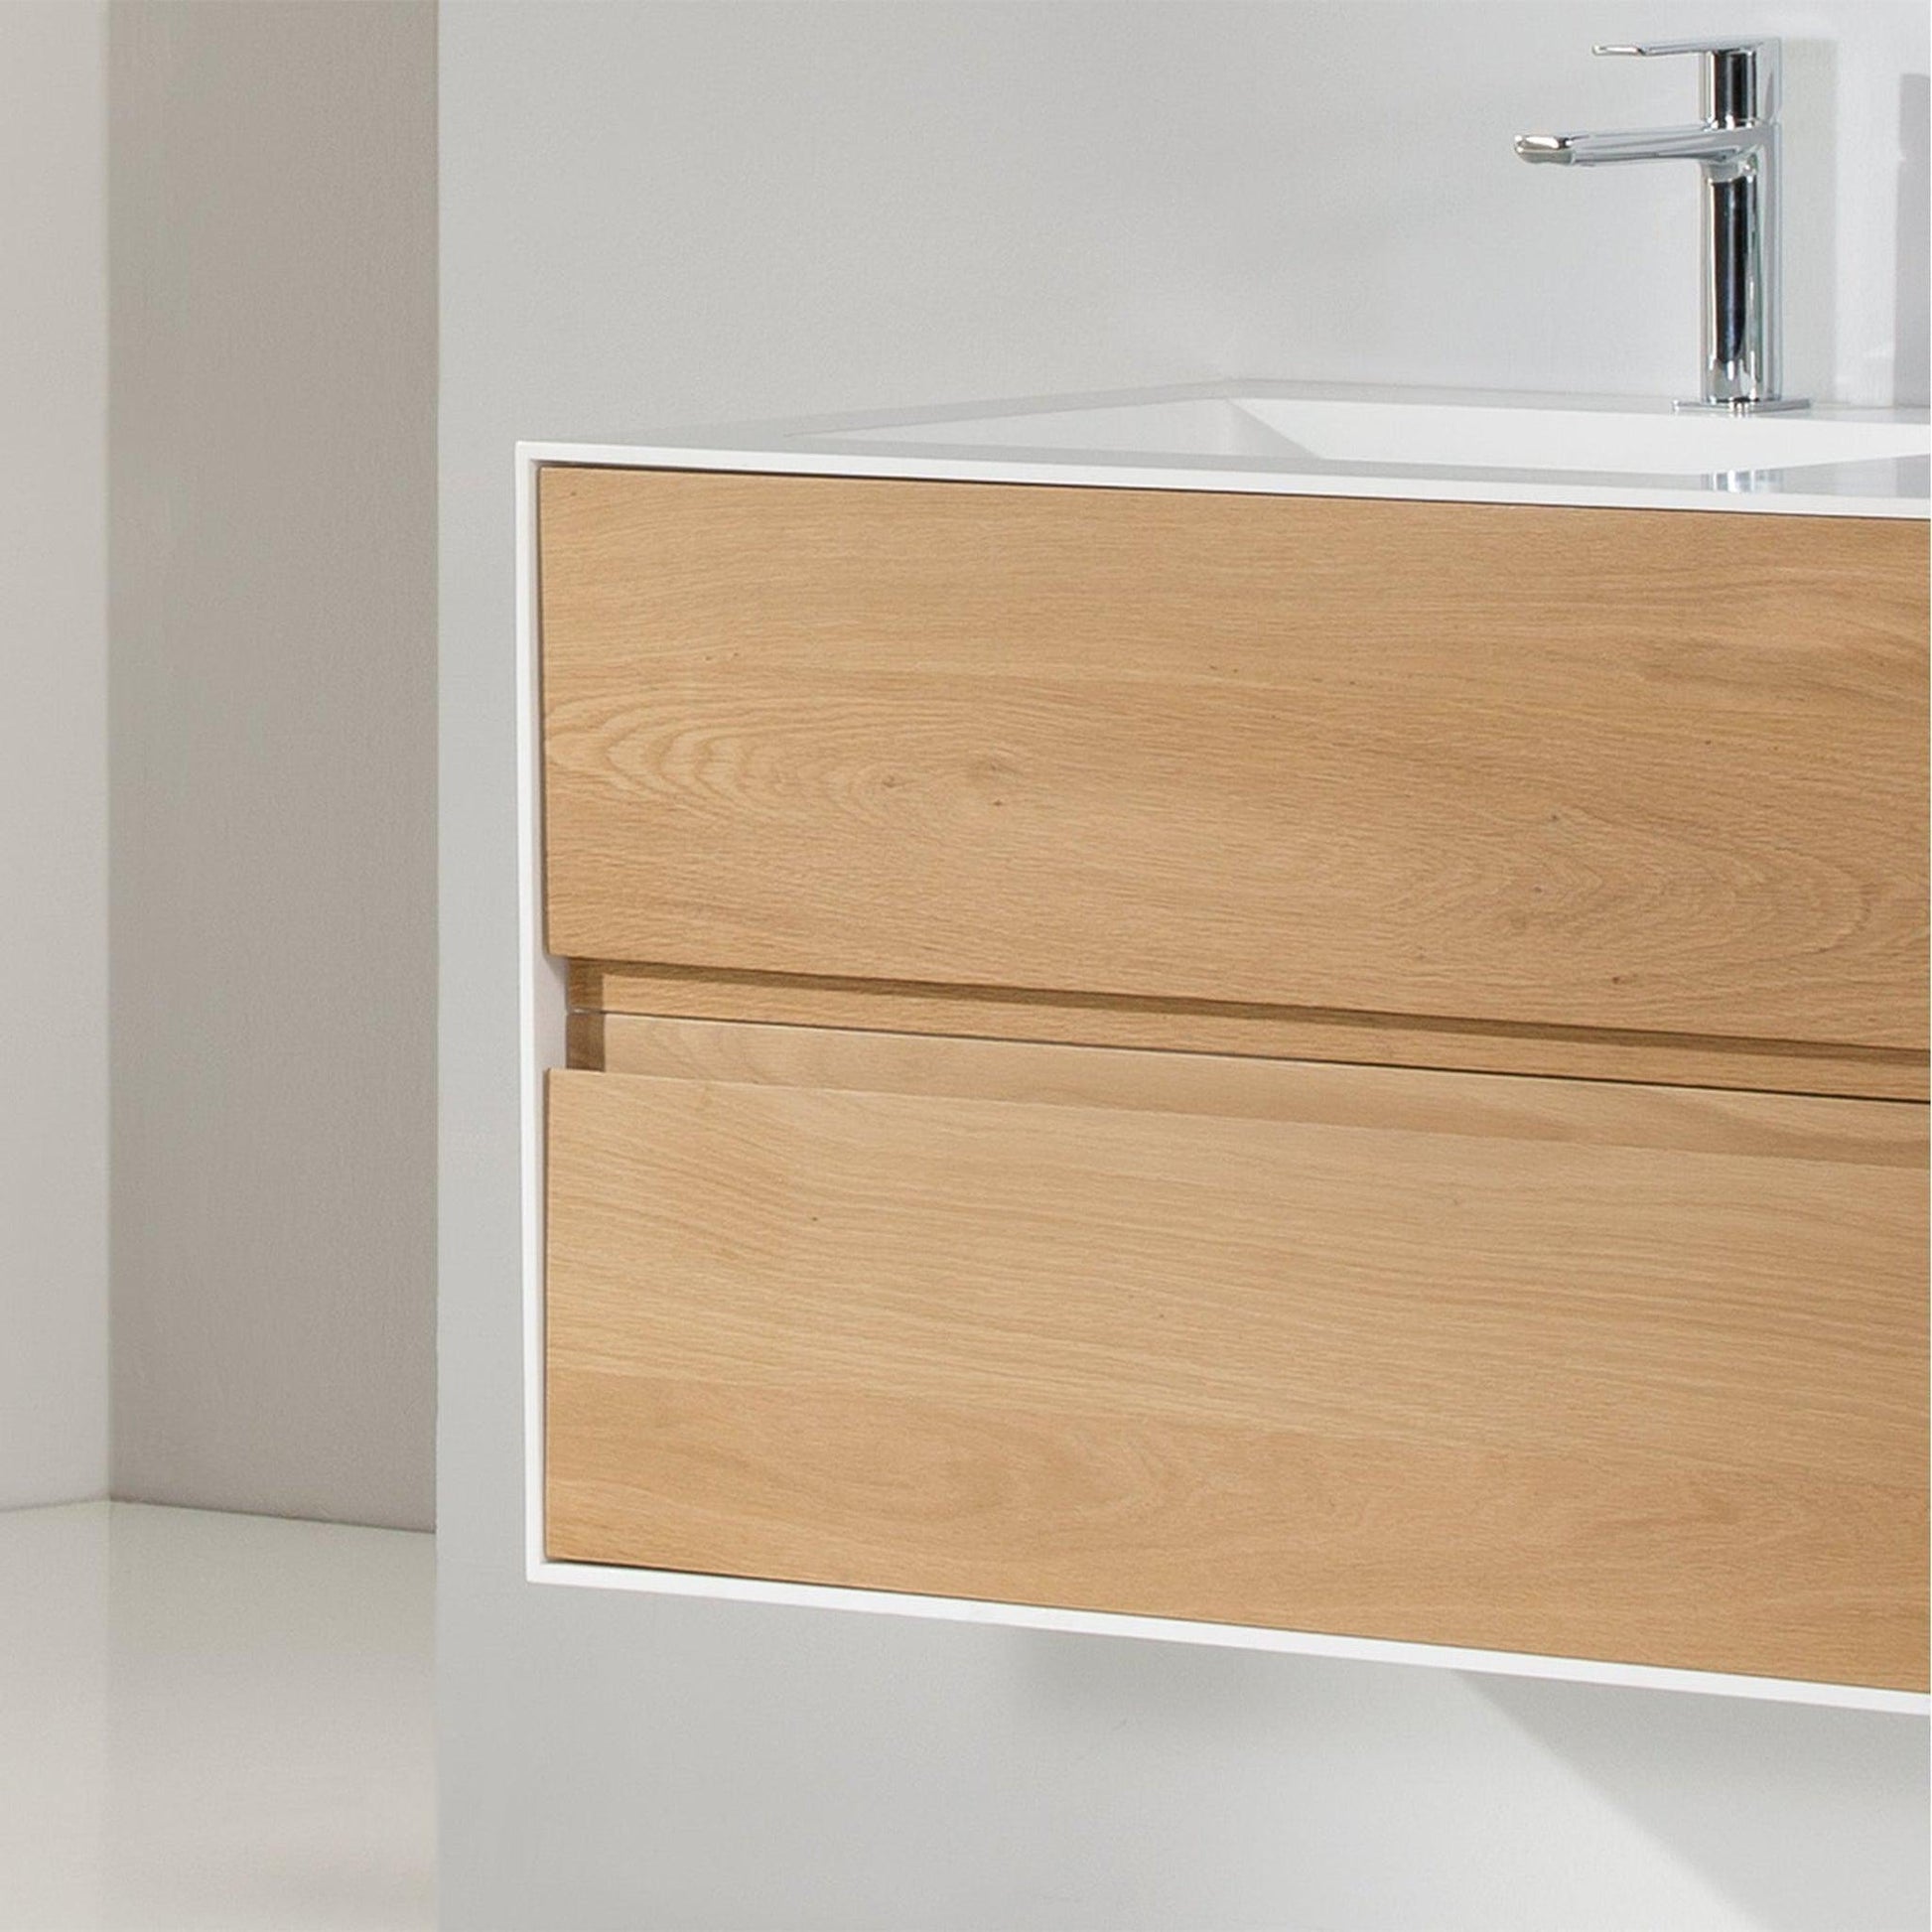 Eviva Elisa 44" x 20" White and Oak Wall-Mounted Bathroom Vanity With Integrated Sink